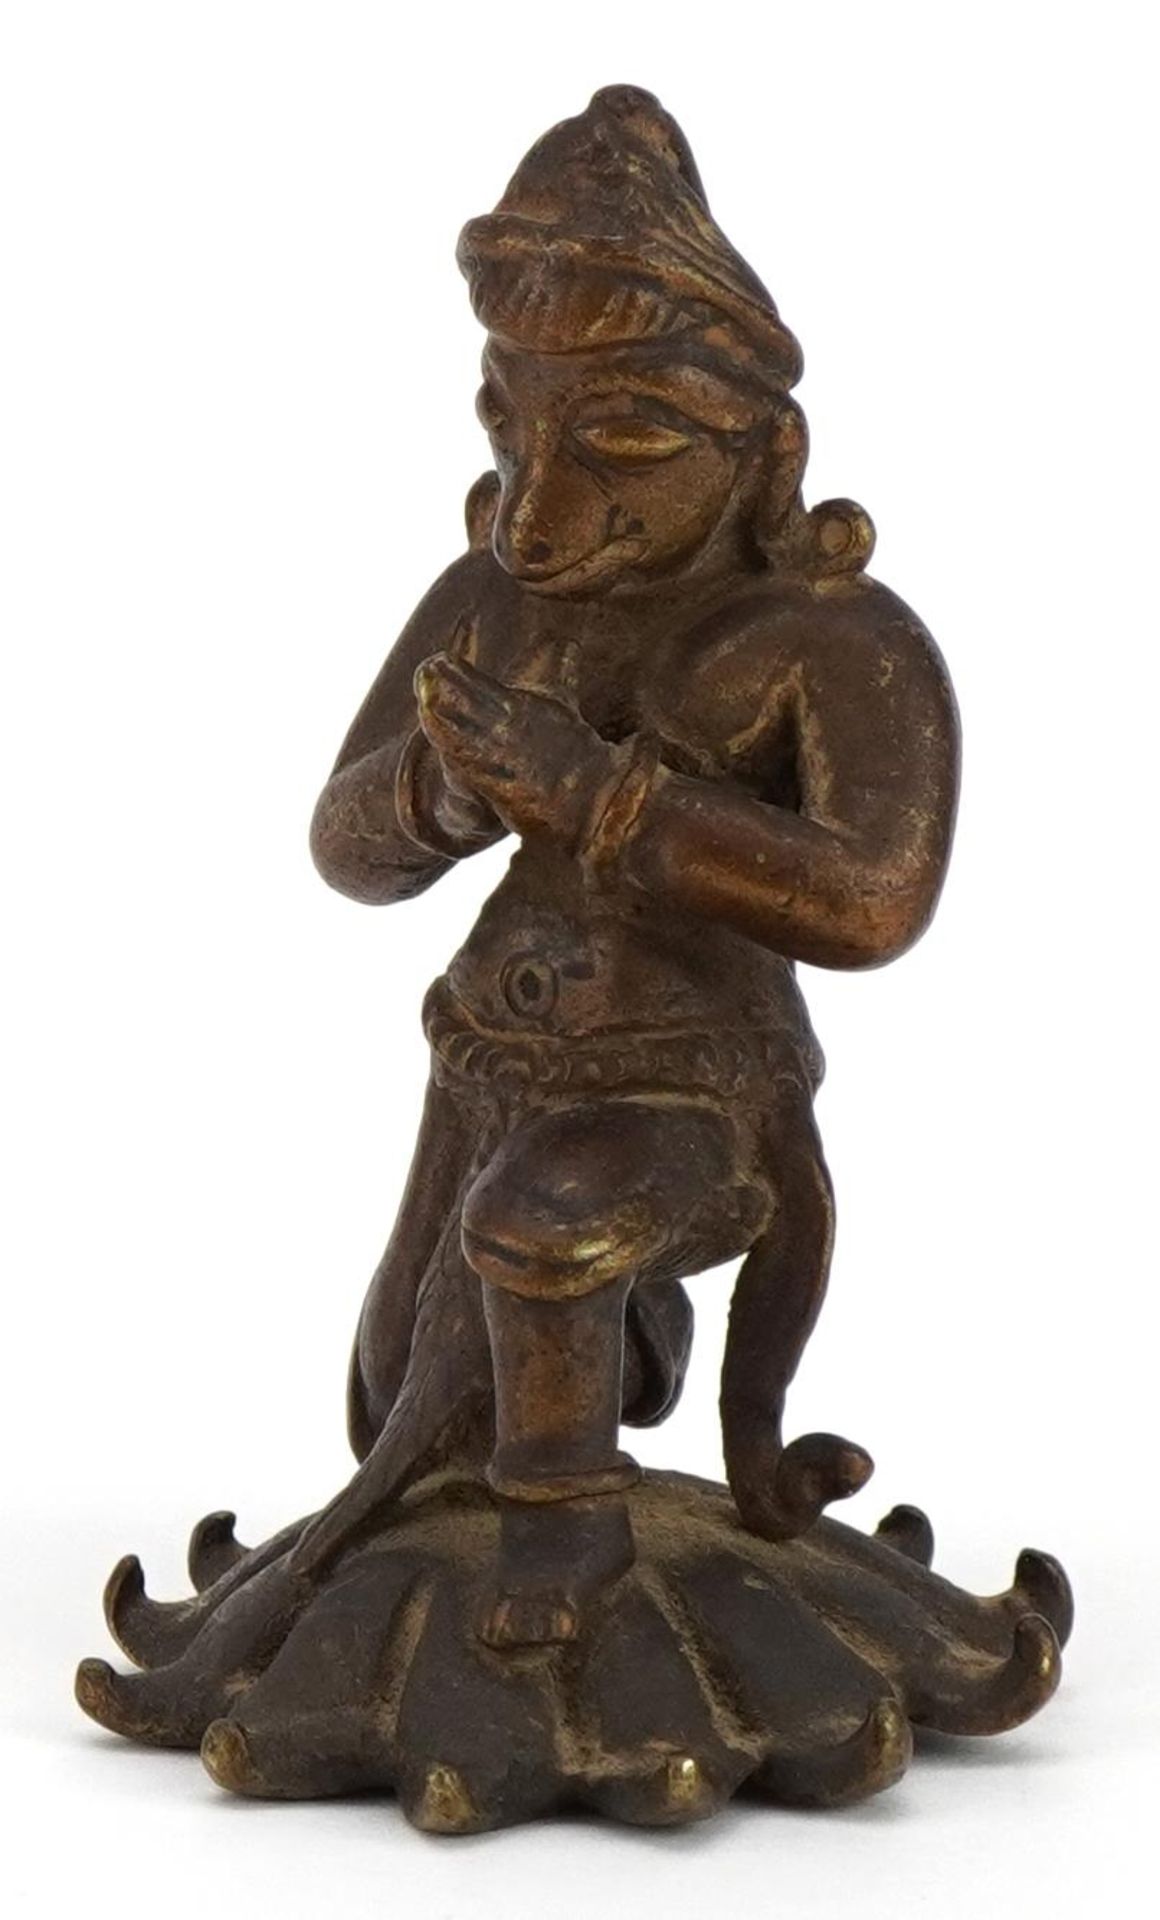 Antique Indian partially gilt bronze figure of kneeling Garuda, 8cm high : For further information